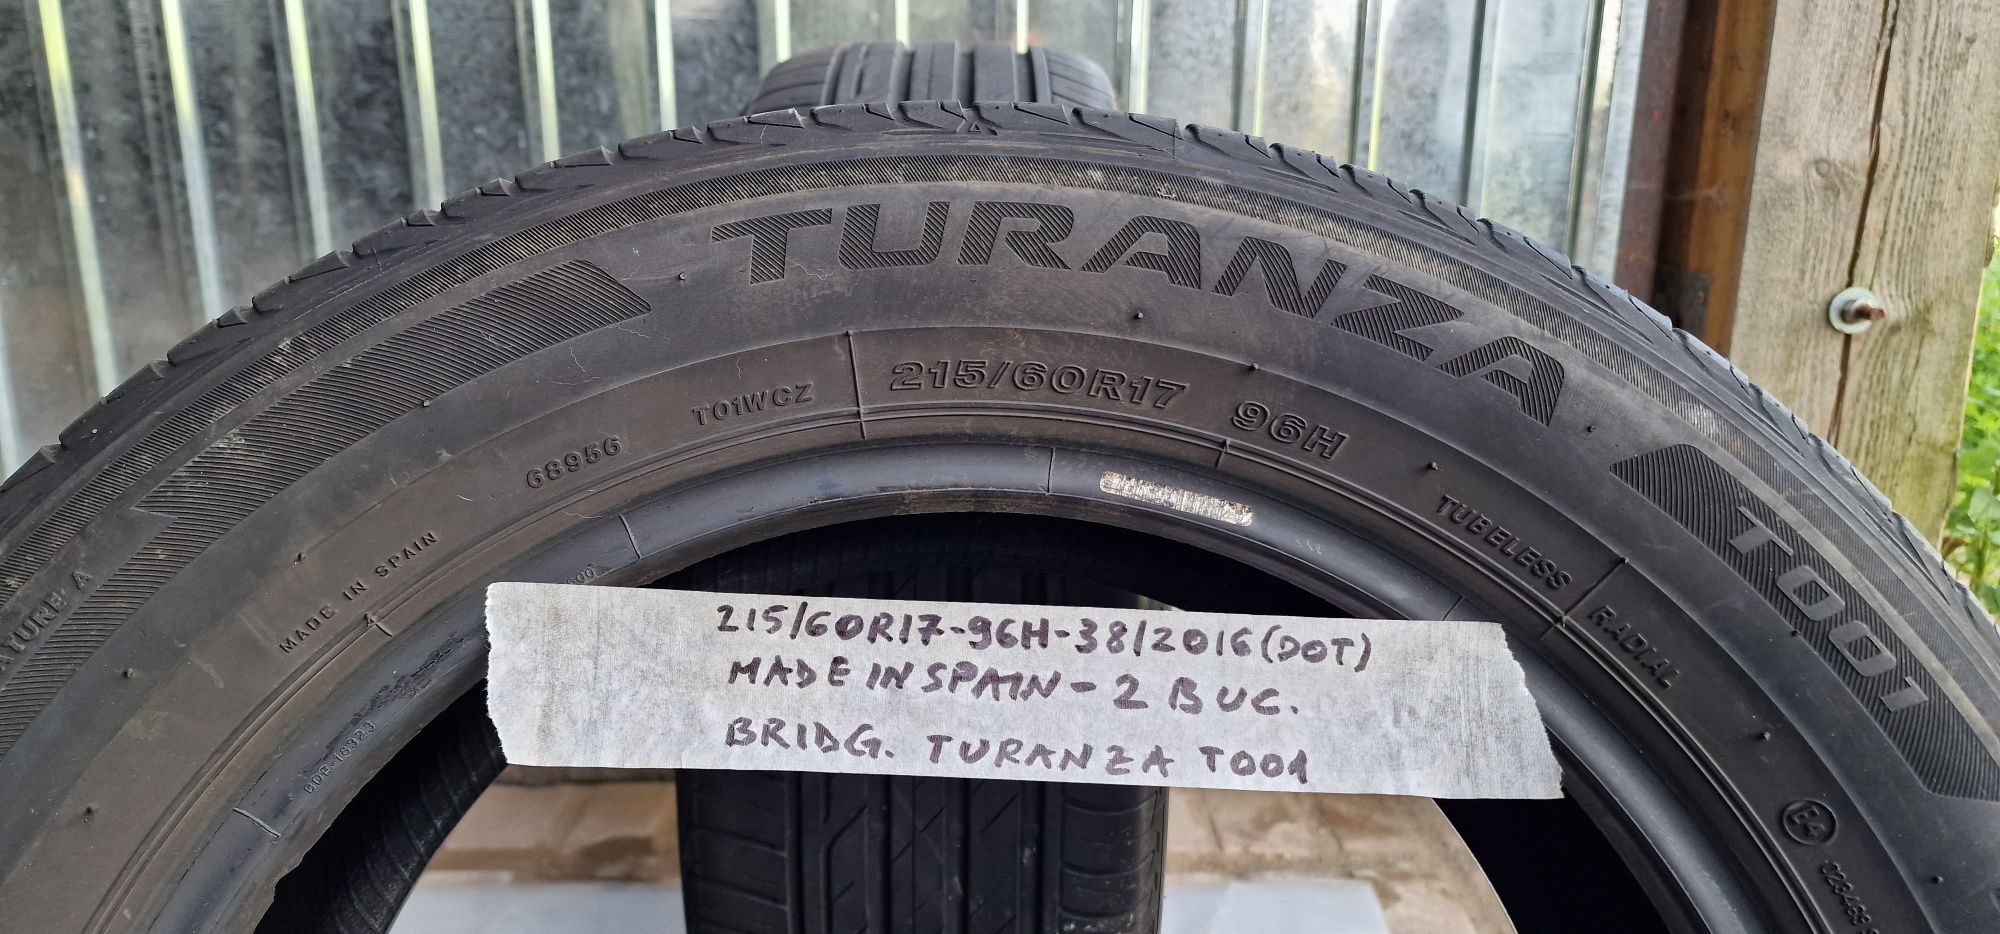 215/60 R17 - 2 anvelope - Bridgestone Turanza - de vara - 6mm+